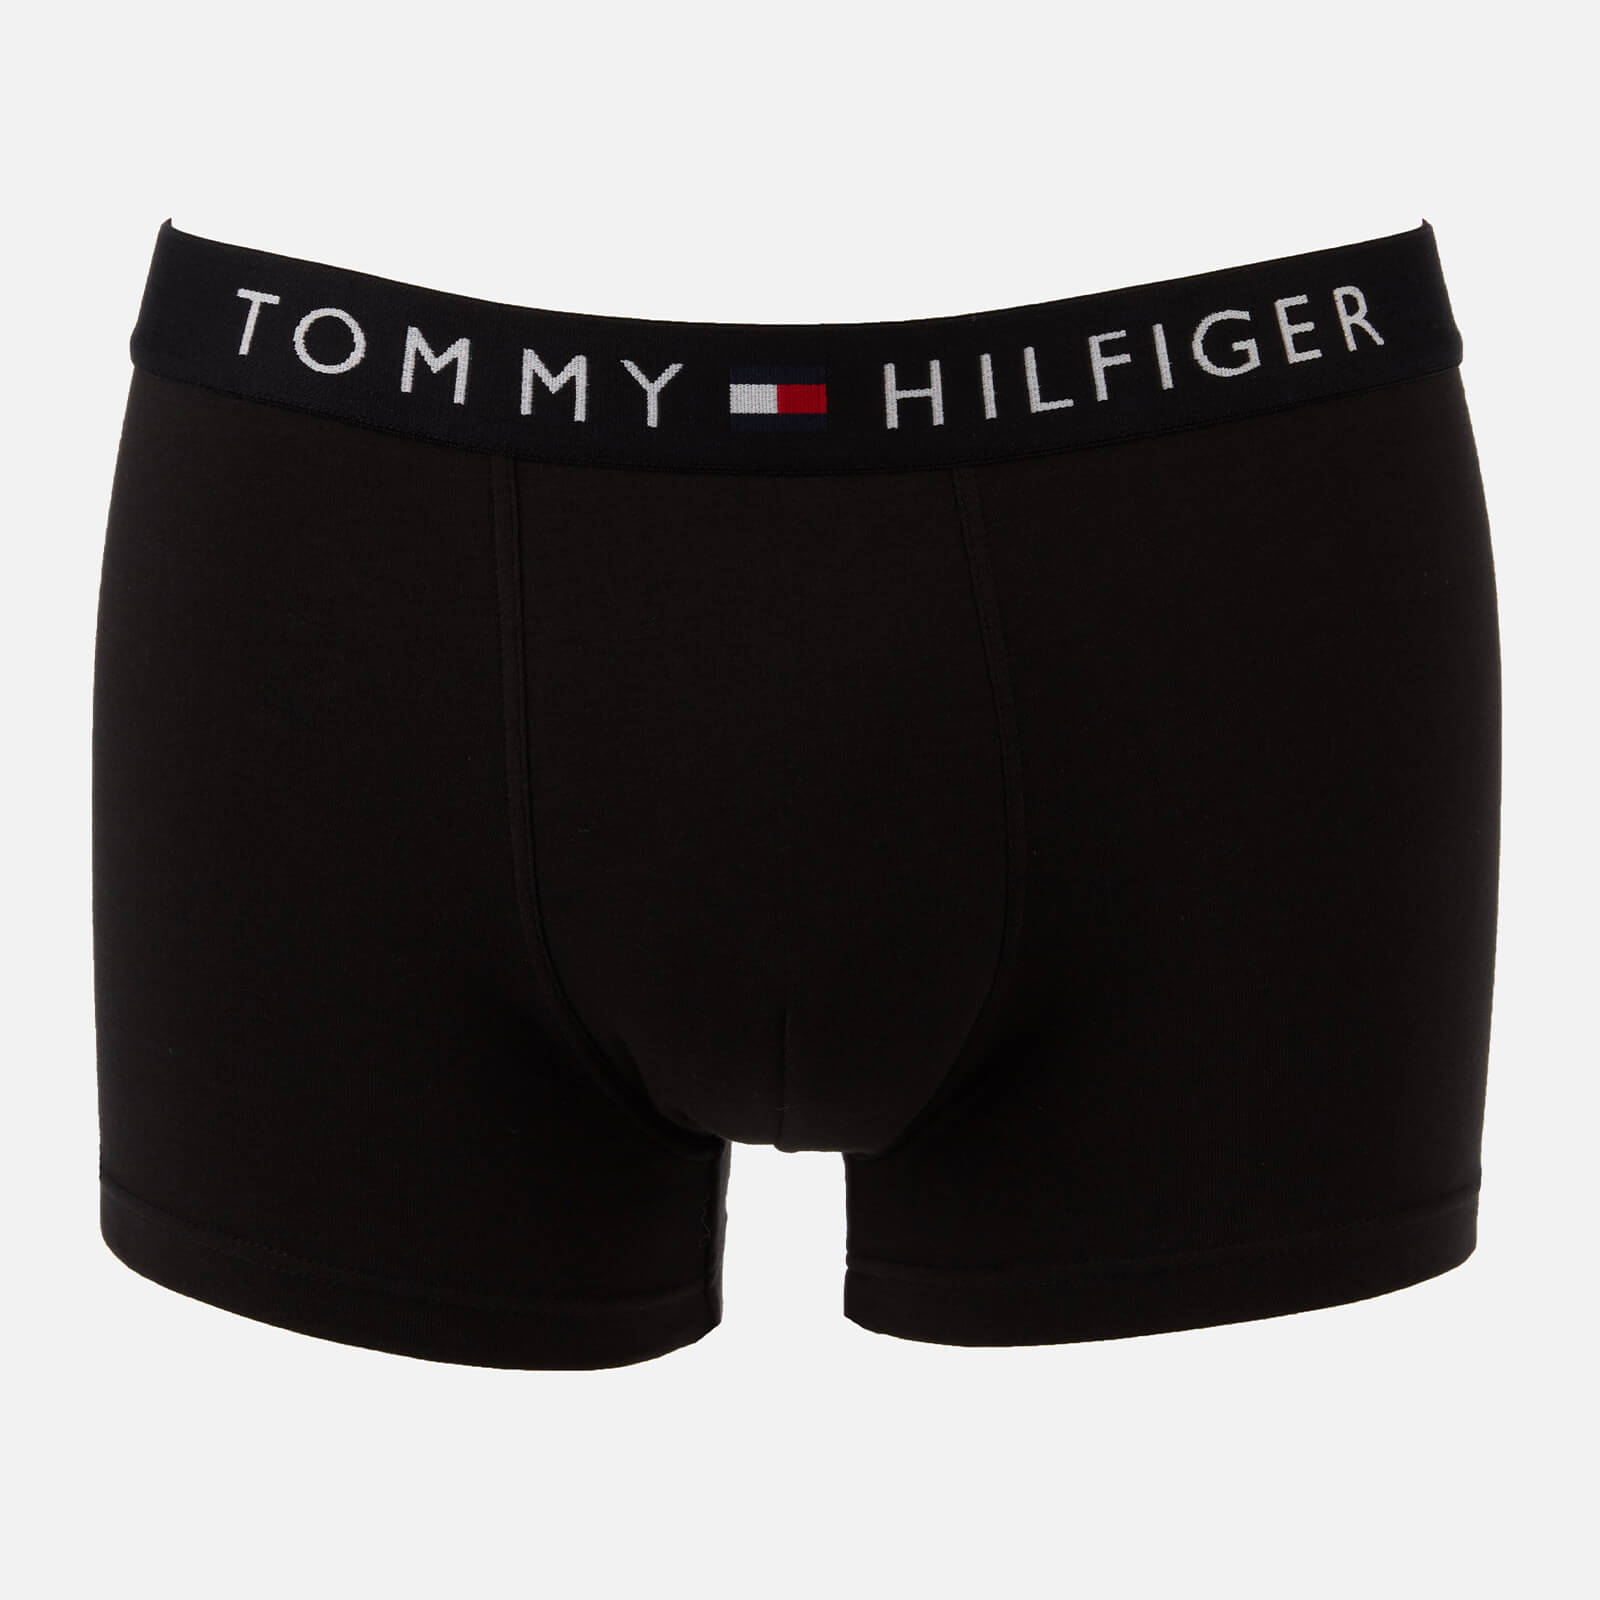 Tommy Hilfiger Men's Tommy Original Cotton Trunks - Black - S